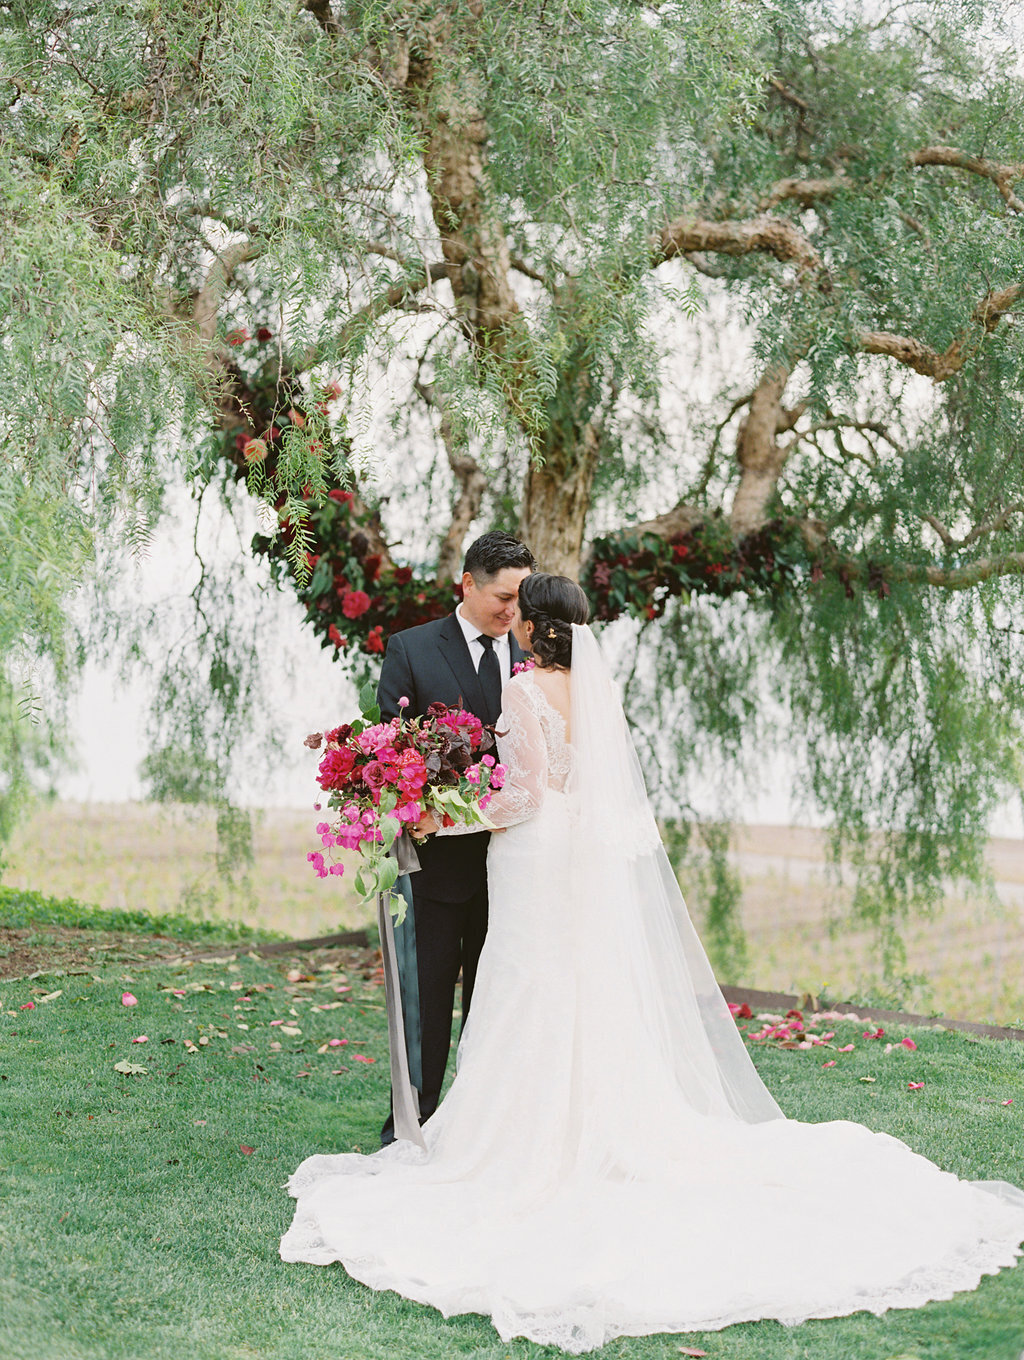 max-owens-design-destination-wedding-california-09-couple